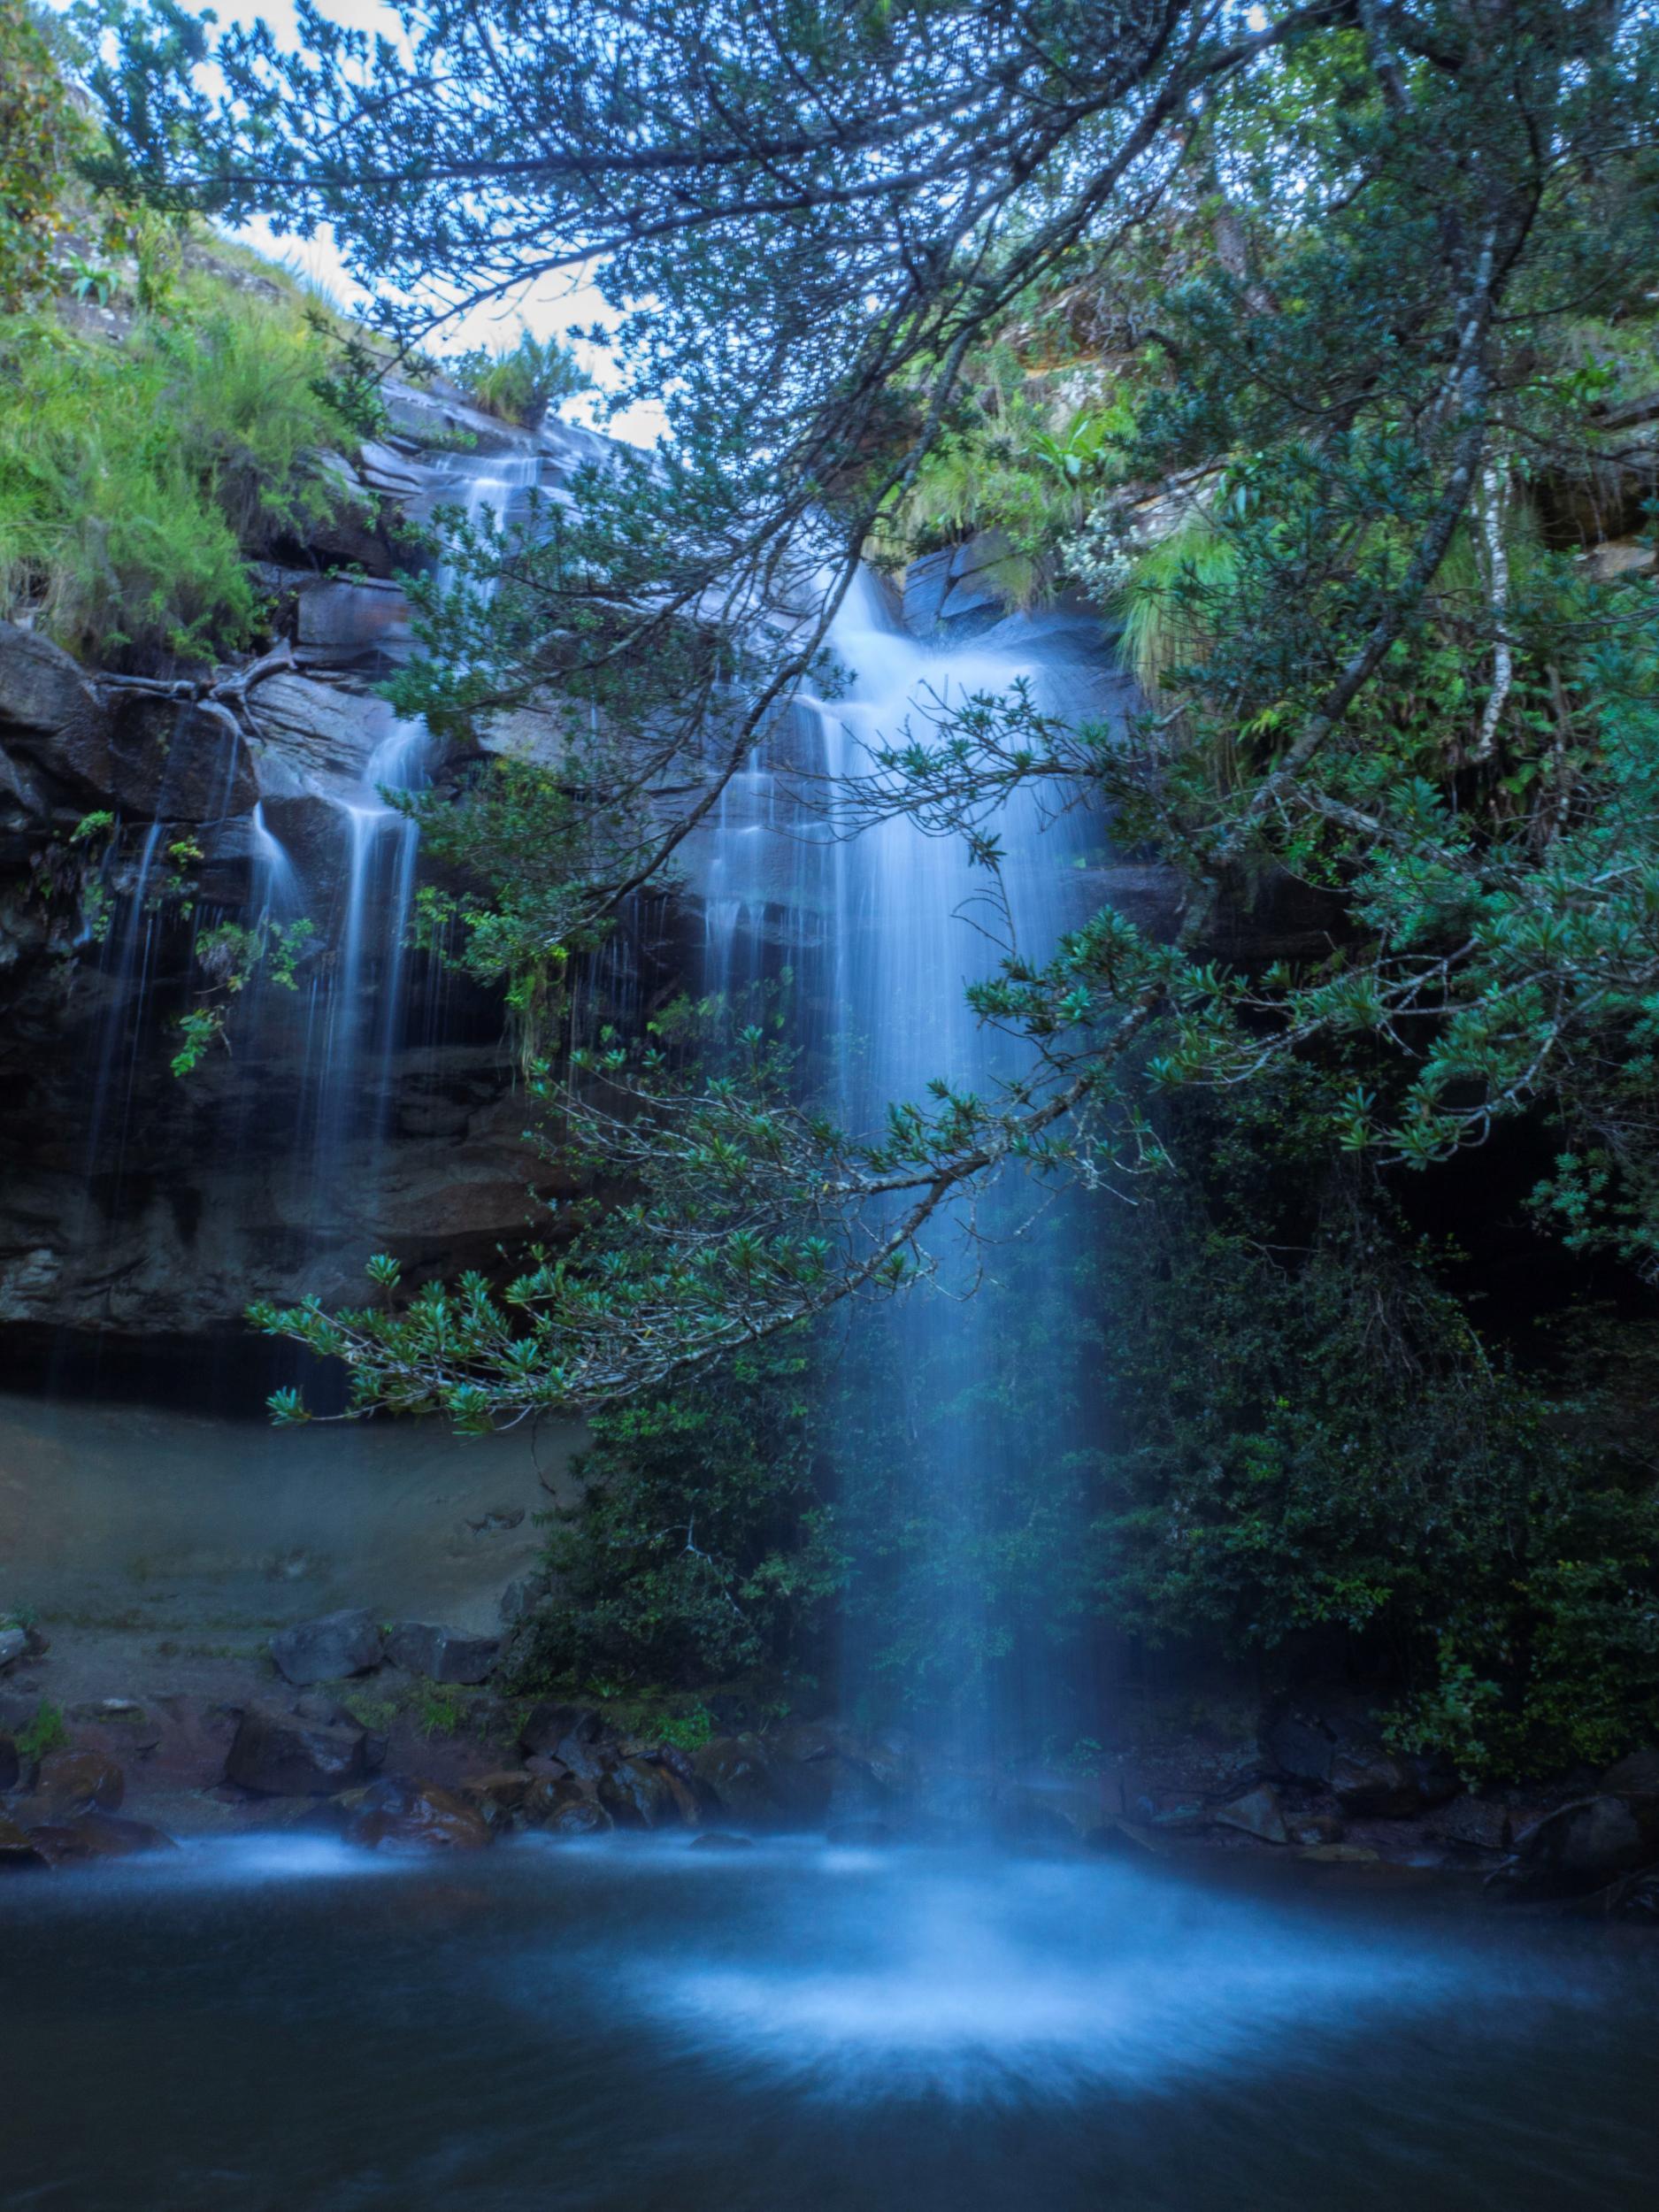 Doreen Waterfall is well worth the 45-minute hike